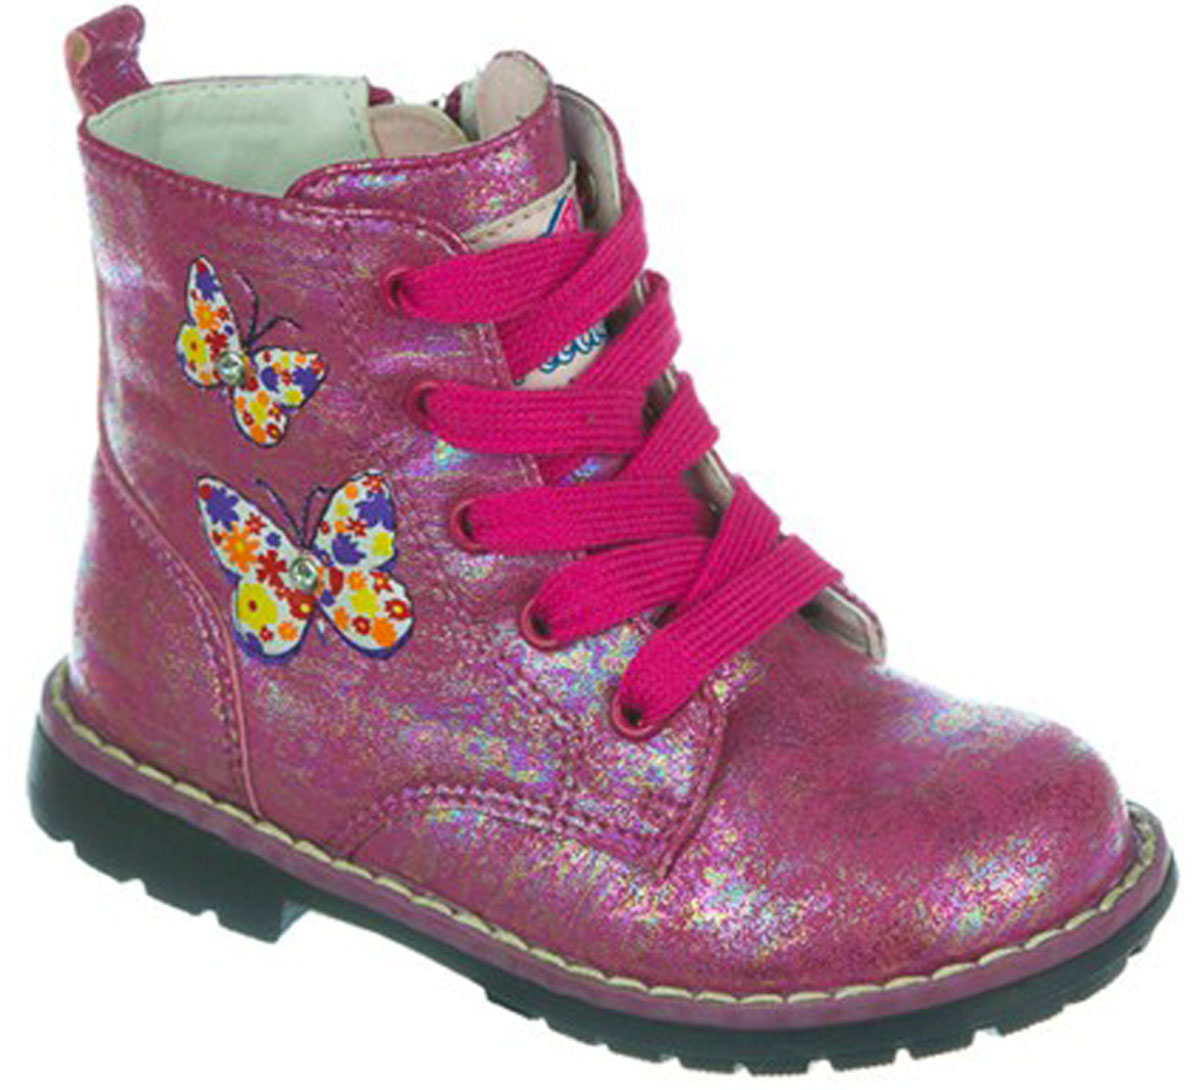 Ботинки для девочки Indigo Kids, цвет: фуксия. 51-293A/12. Размер 22